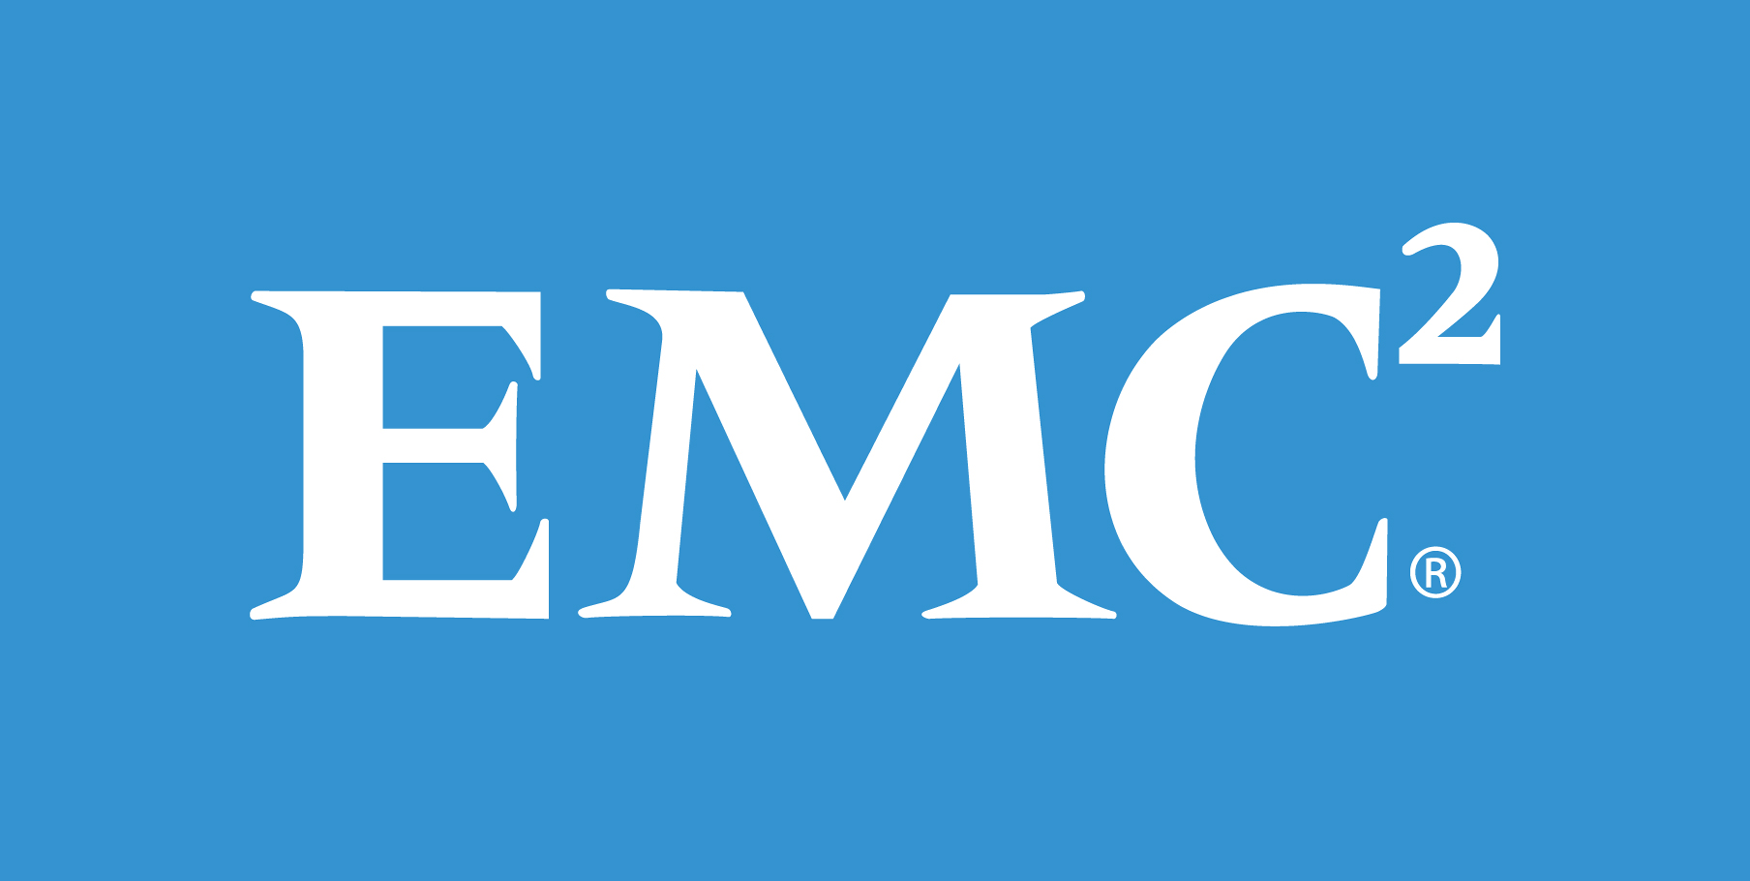 EMC Logo PNG Image - PurePNG | Free transparent CC0 PNG Image Library